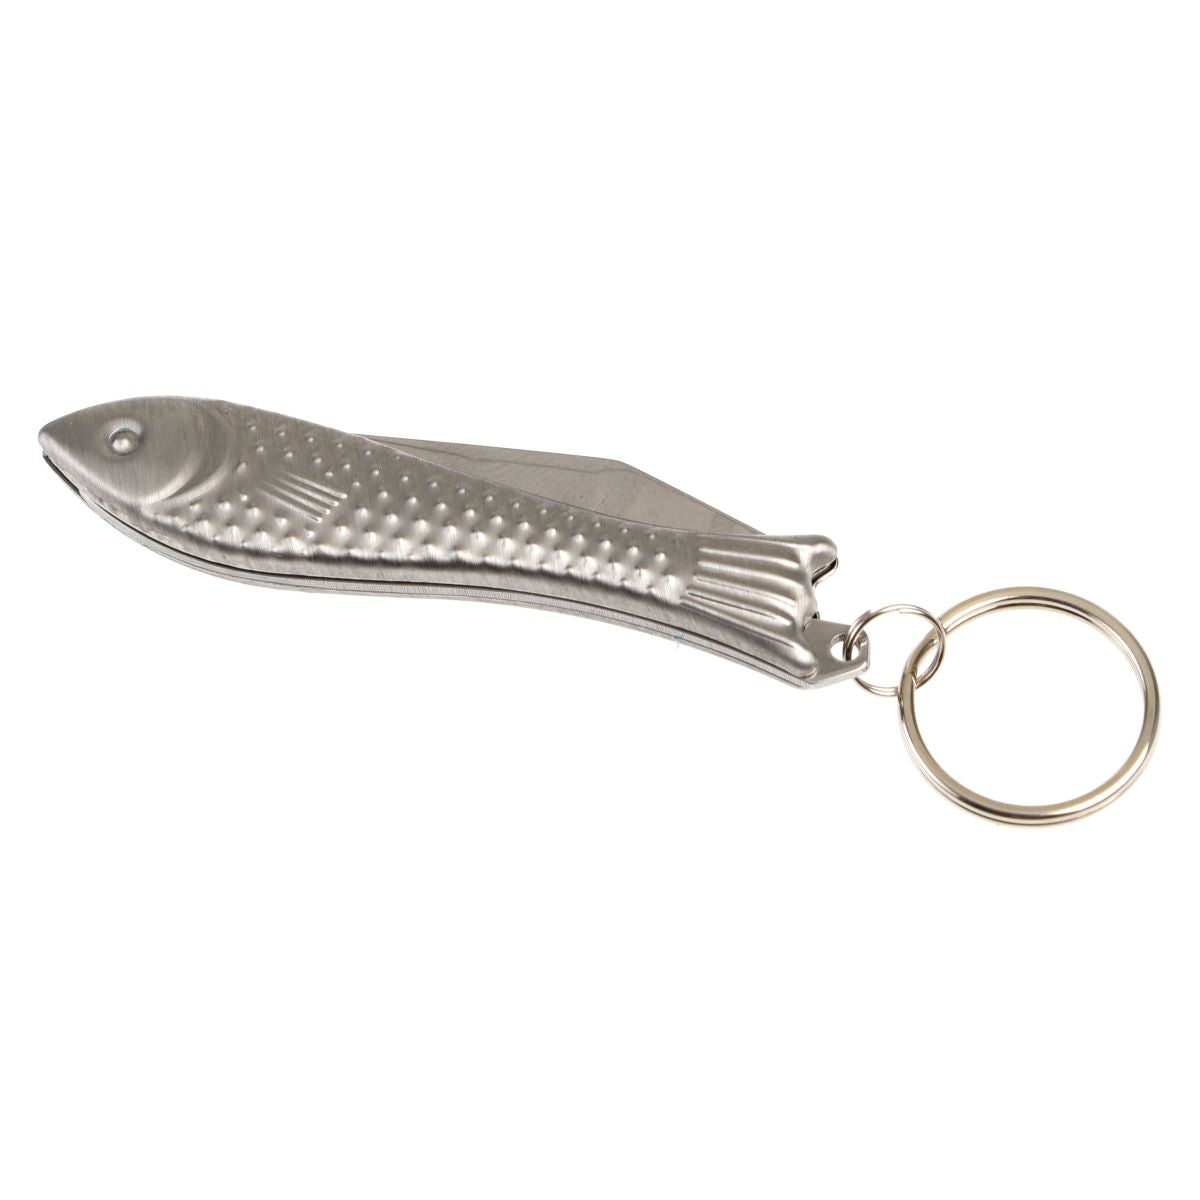 Fish shaped pocket knife keyring - Spirit of Adventure